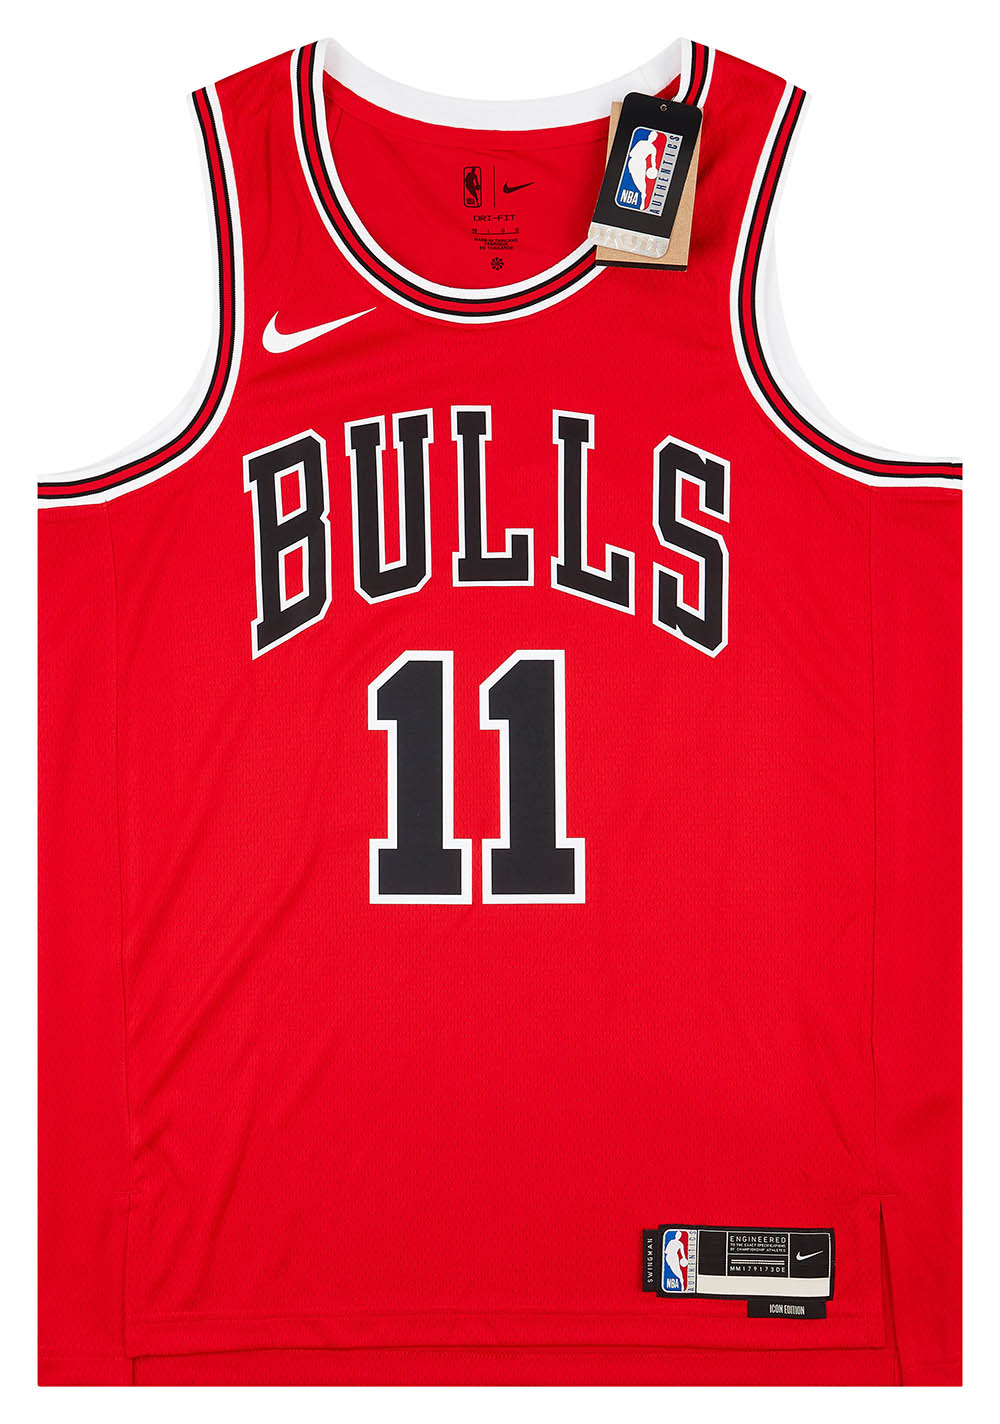 bulls 11 jersey